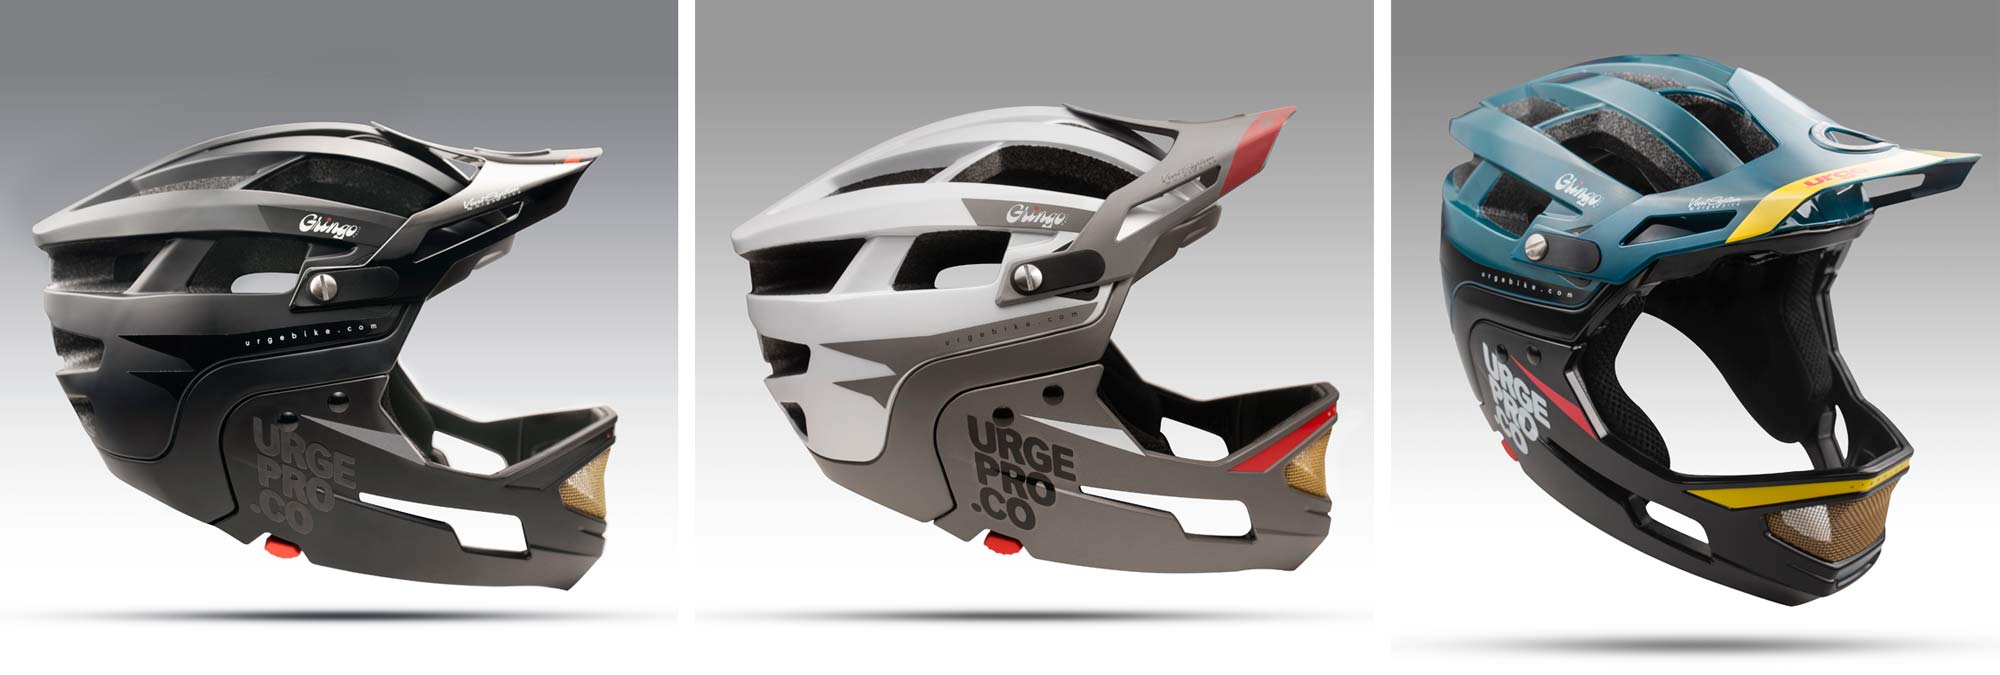 Urge Gingo Matic convertible full face all-mountain enduro helmet